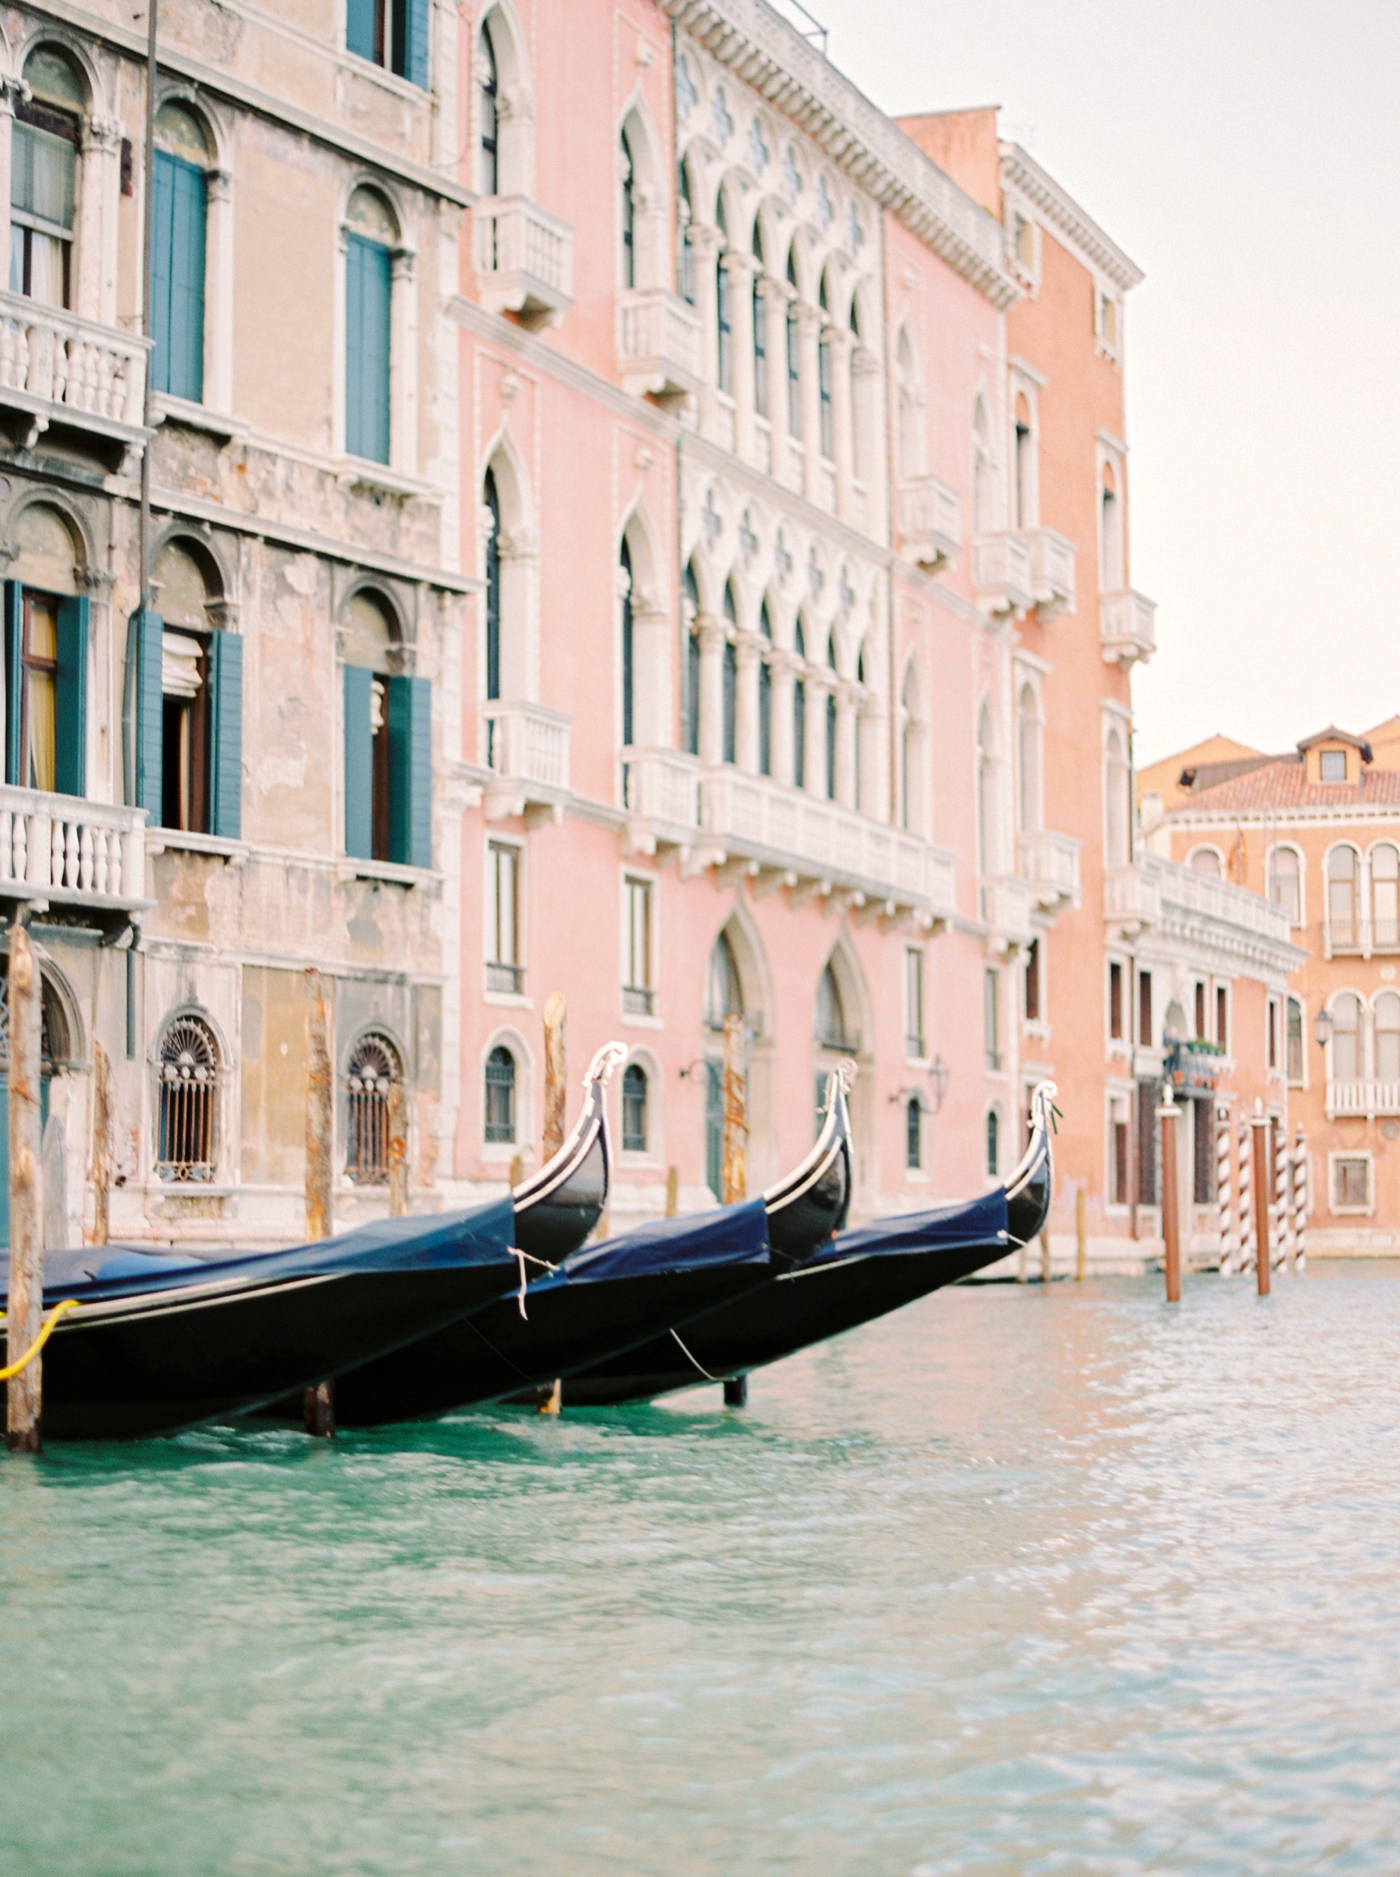 Venice Italy commercial travel photographer | fine art film prints | justine milton photography